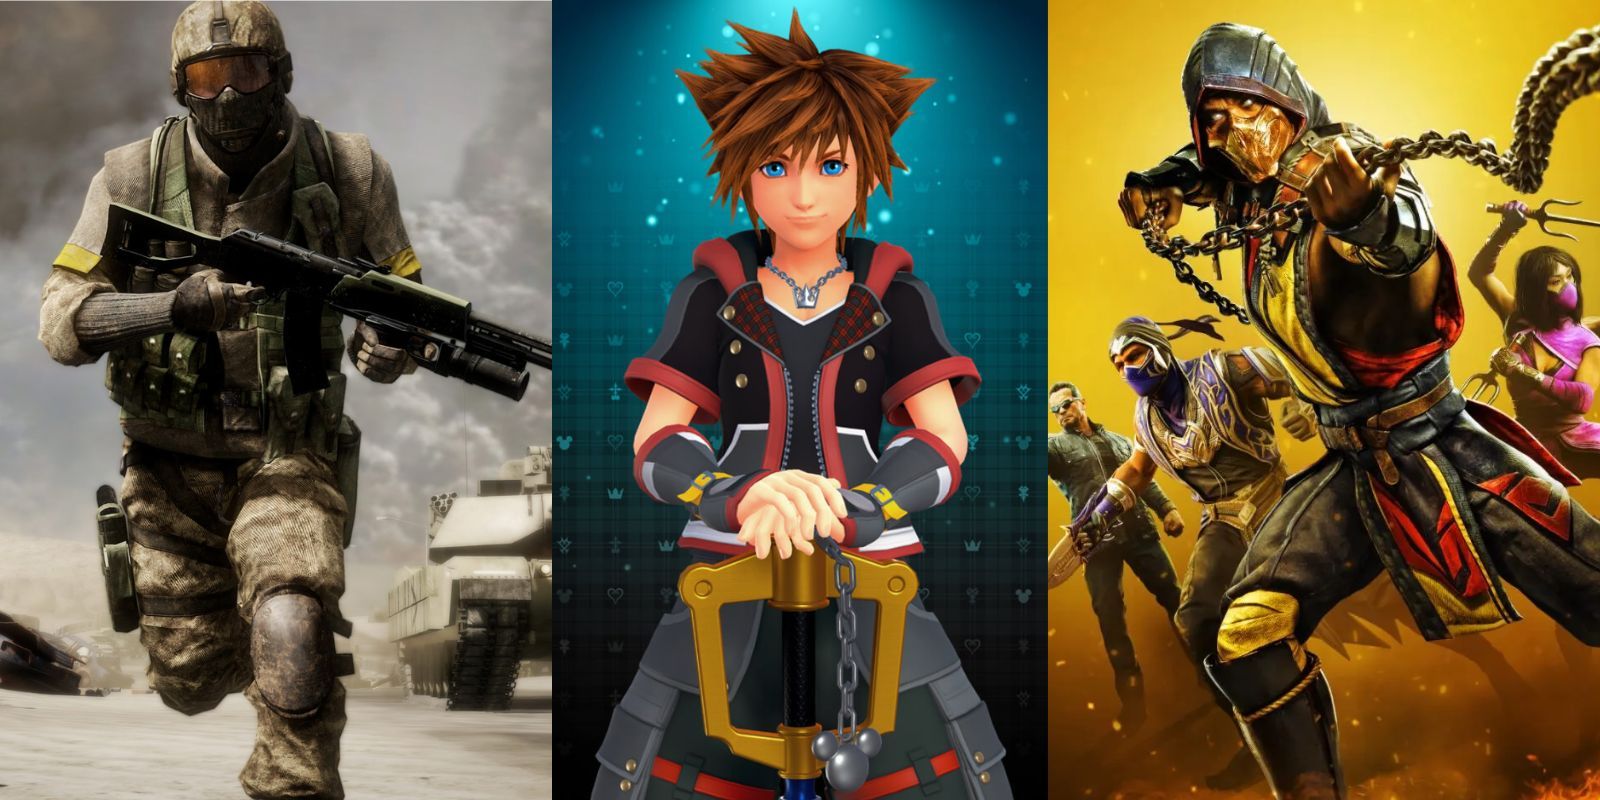 Image Collage of Battlefield, Kingdom Hearts, and Mortal Kombat